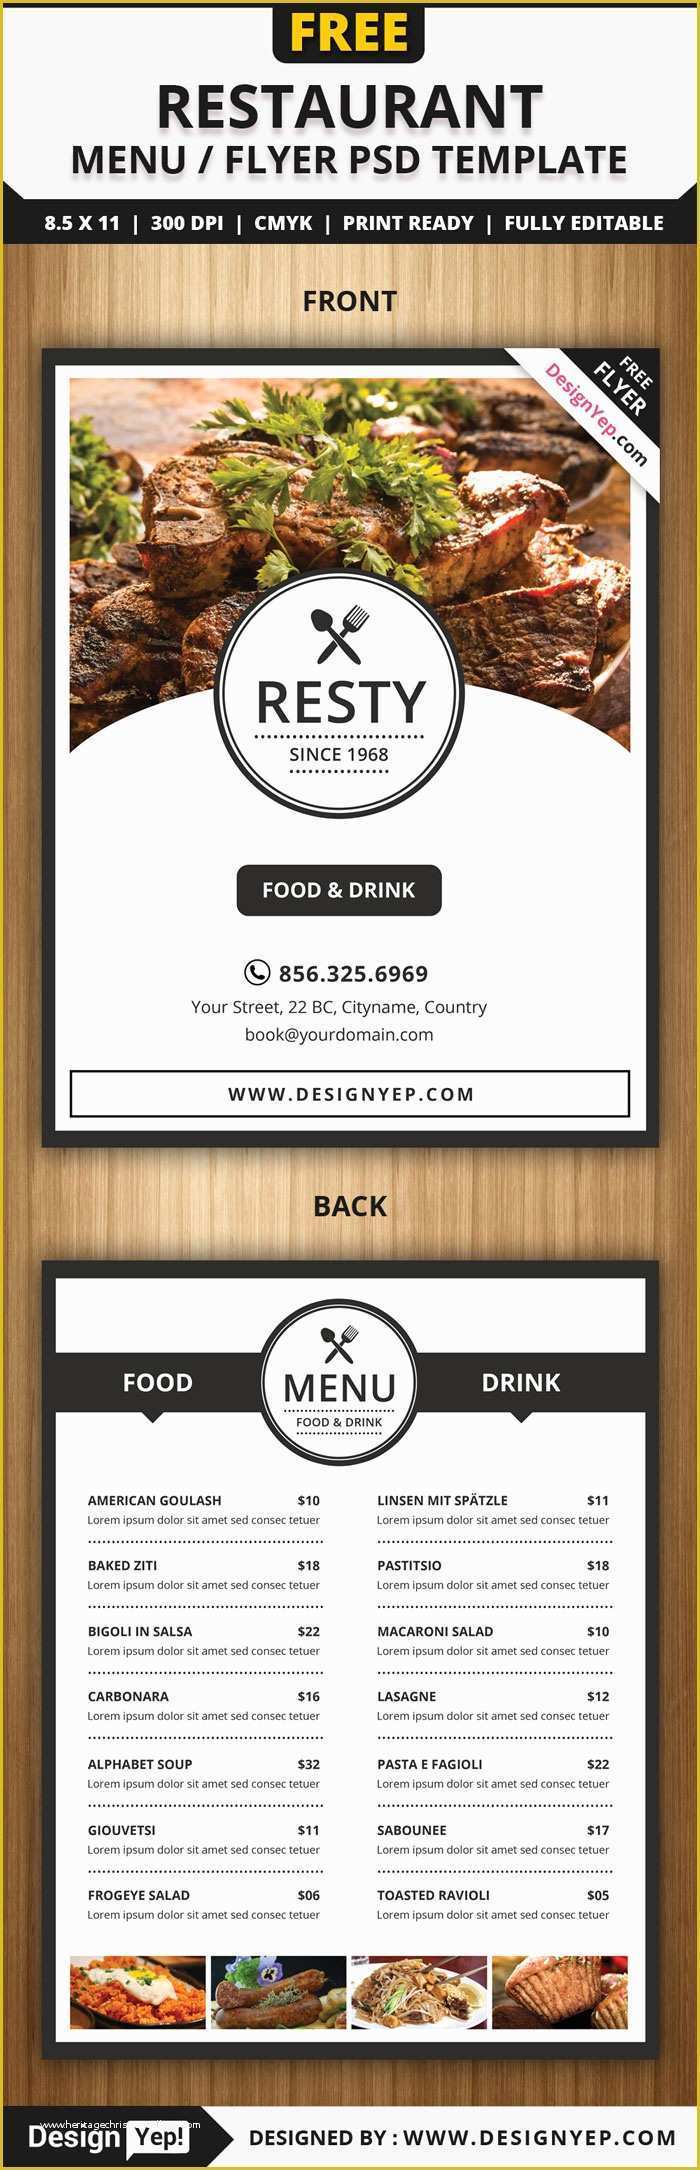 Restaurant Flyers Templates Free Of 30 Free Restaurant and Food Menu Flyer Templates Designyep